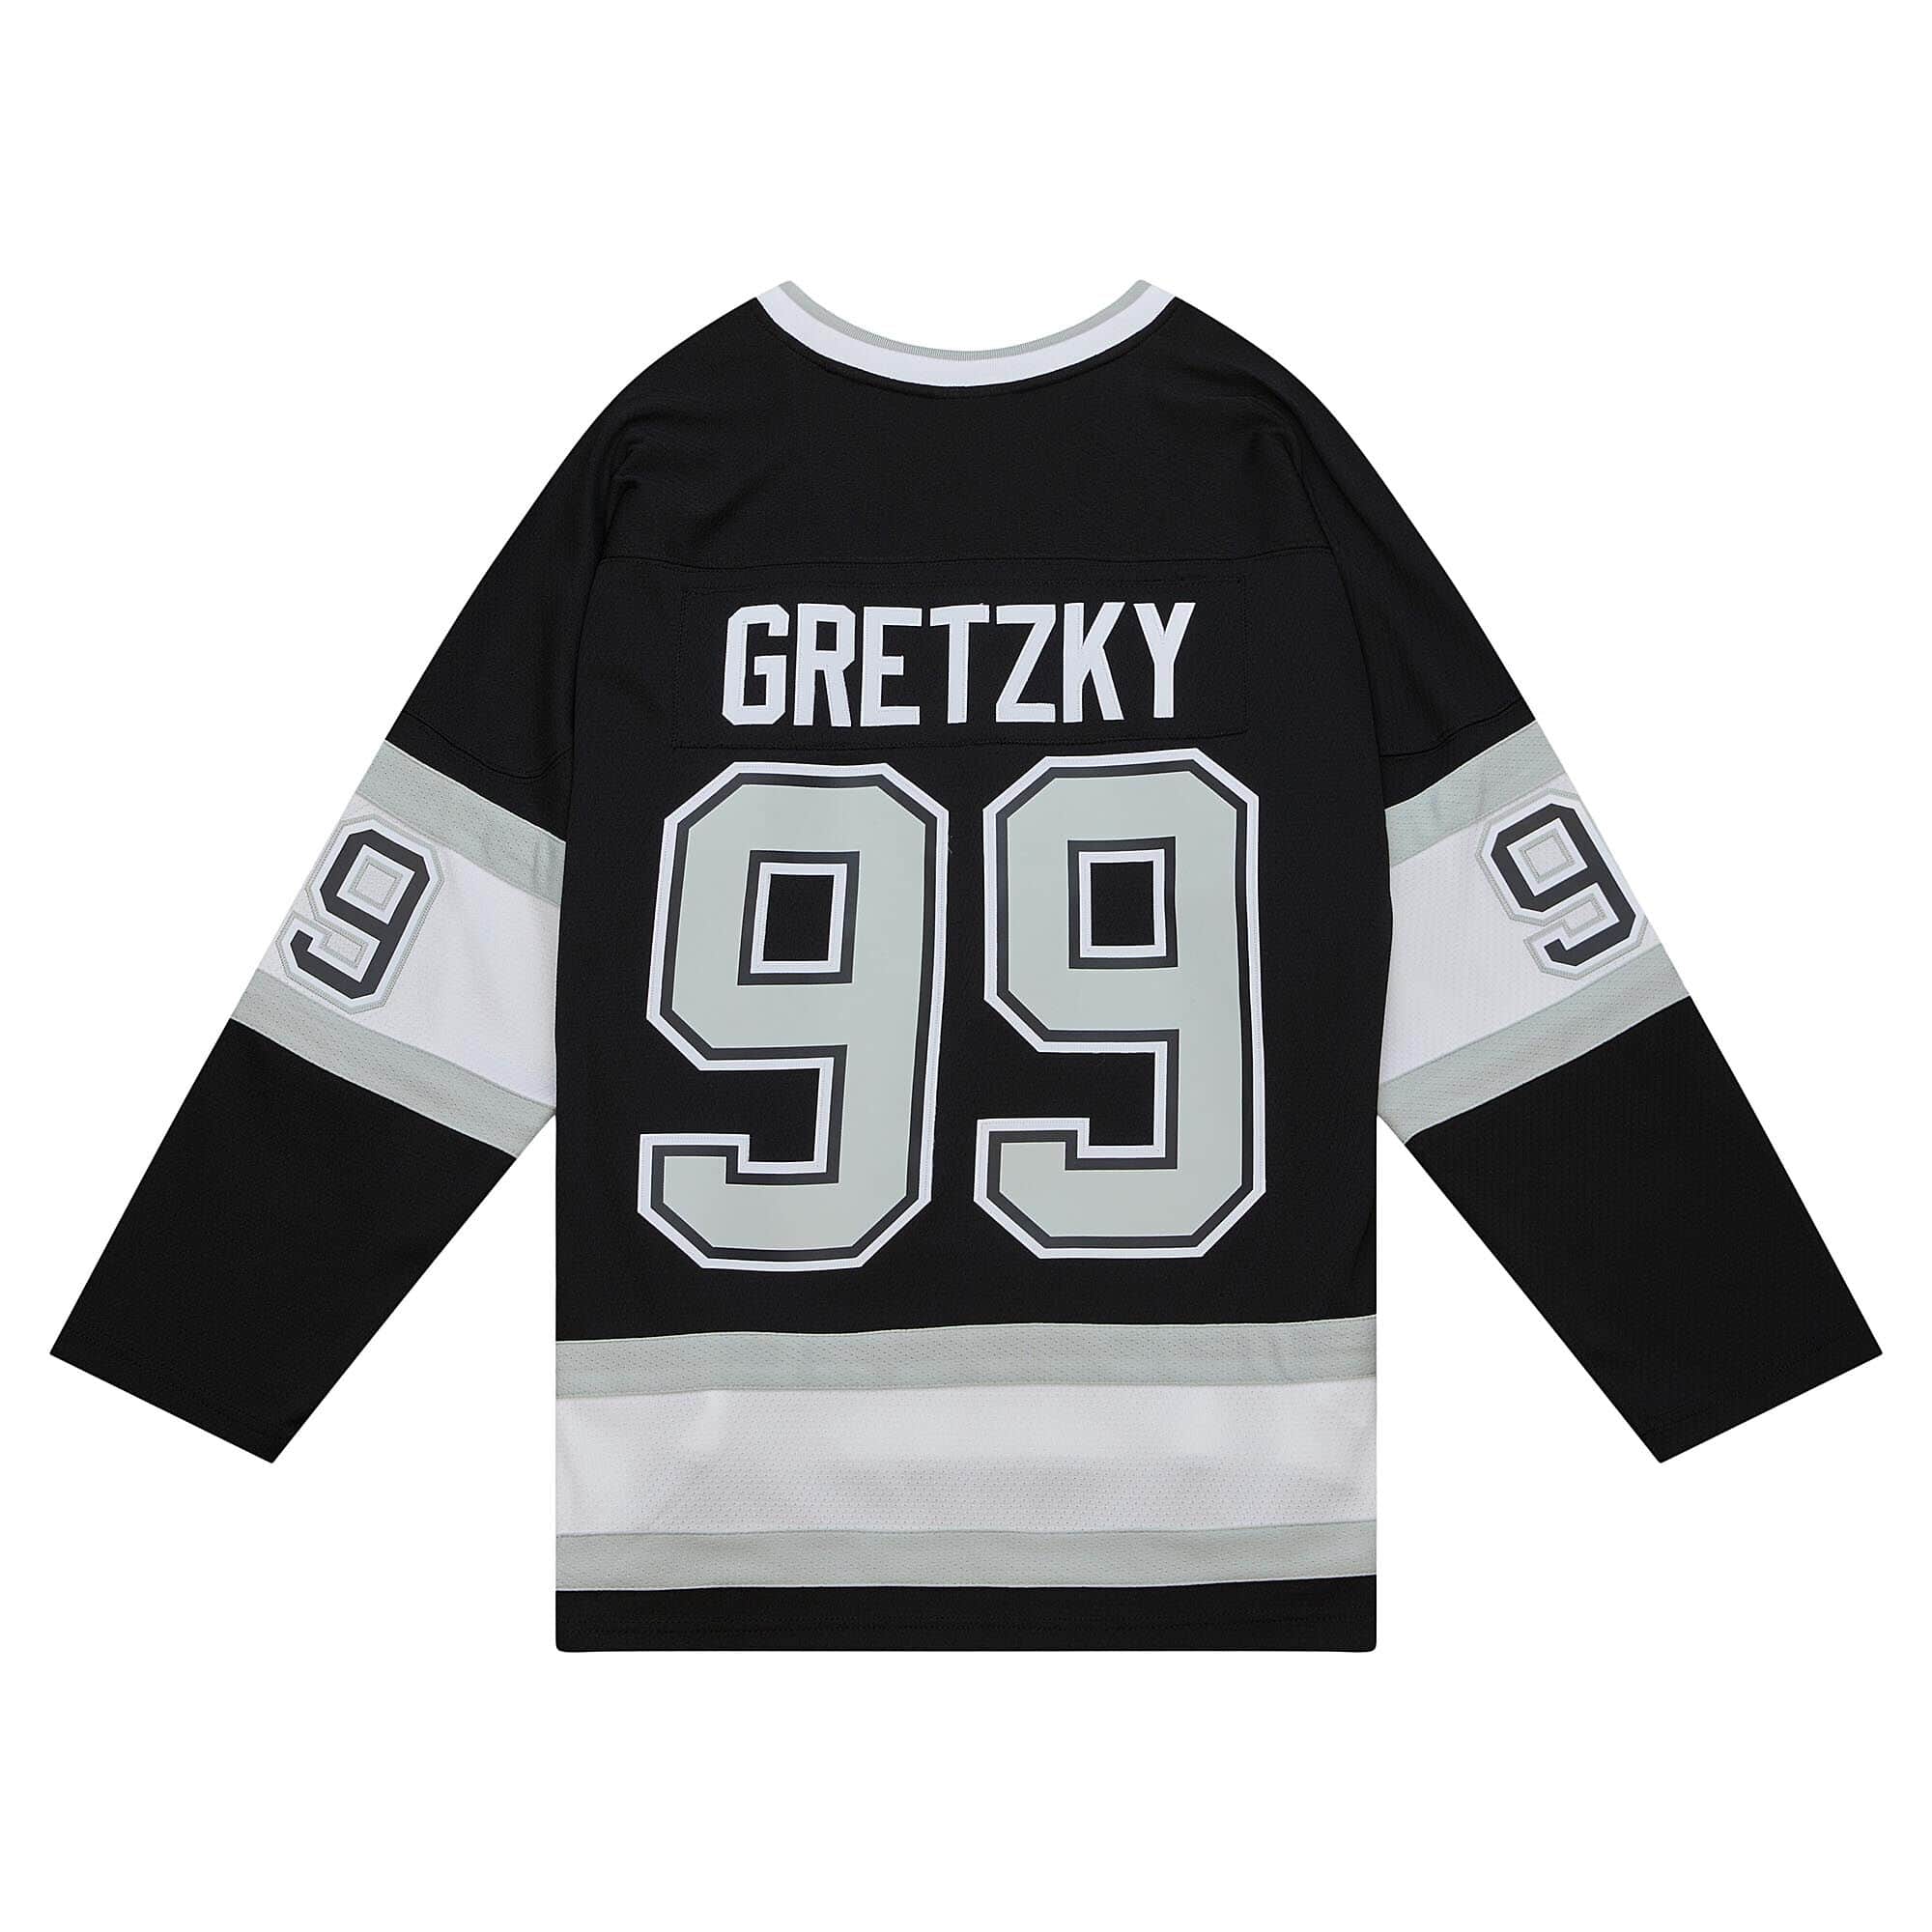 CCM Authentic Wayne Gretzky LA KINGS NHL Hockey Jersey 48 Black